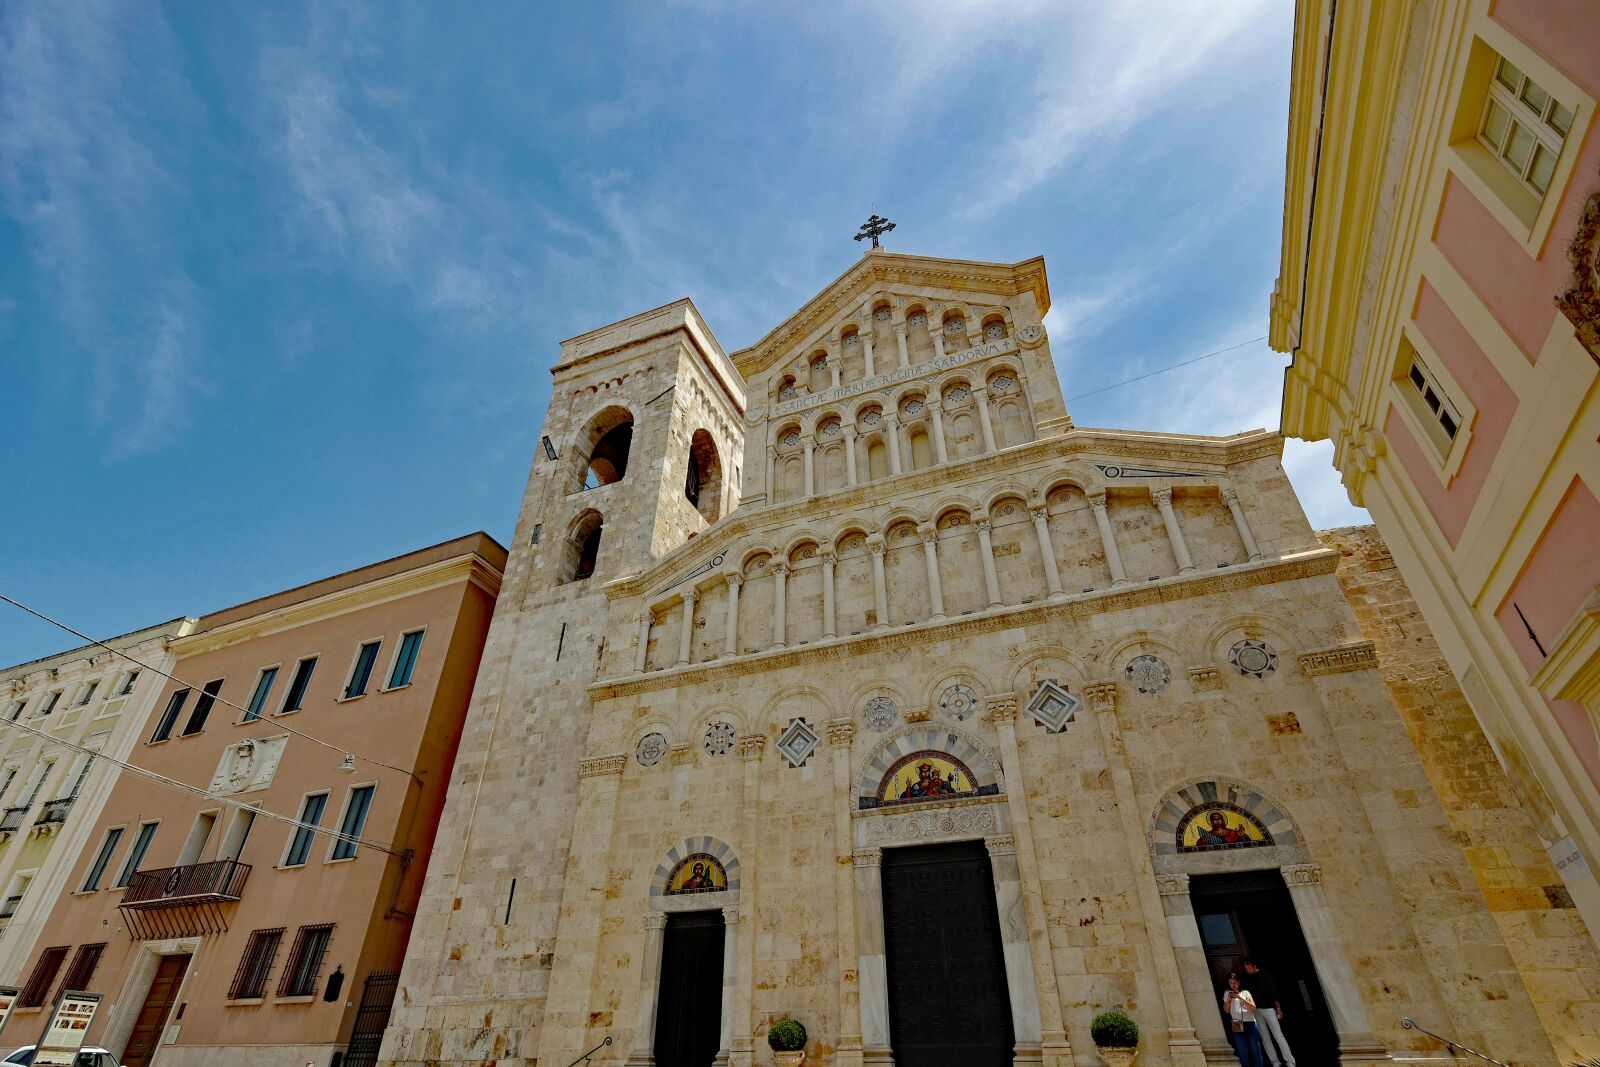 Super-Vario-Elmar-TL  1:3.5-4.5 / 11-23 ASPH. sample photo. Sardinia, cagliari, the cathedral photography